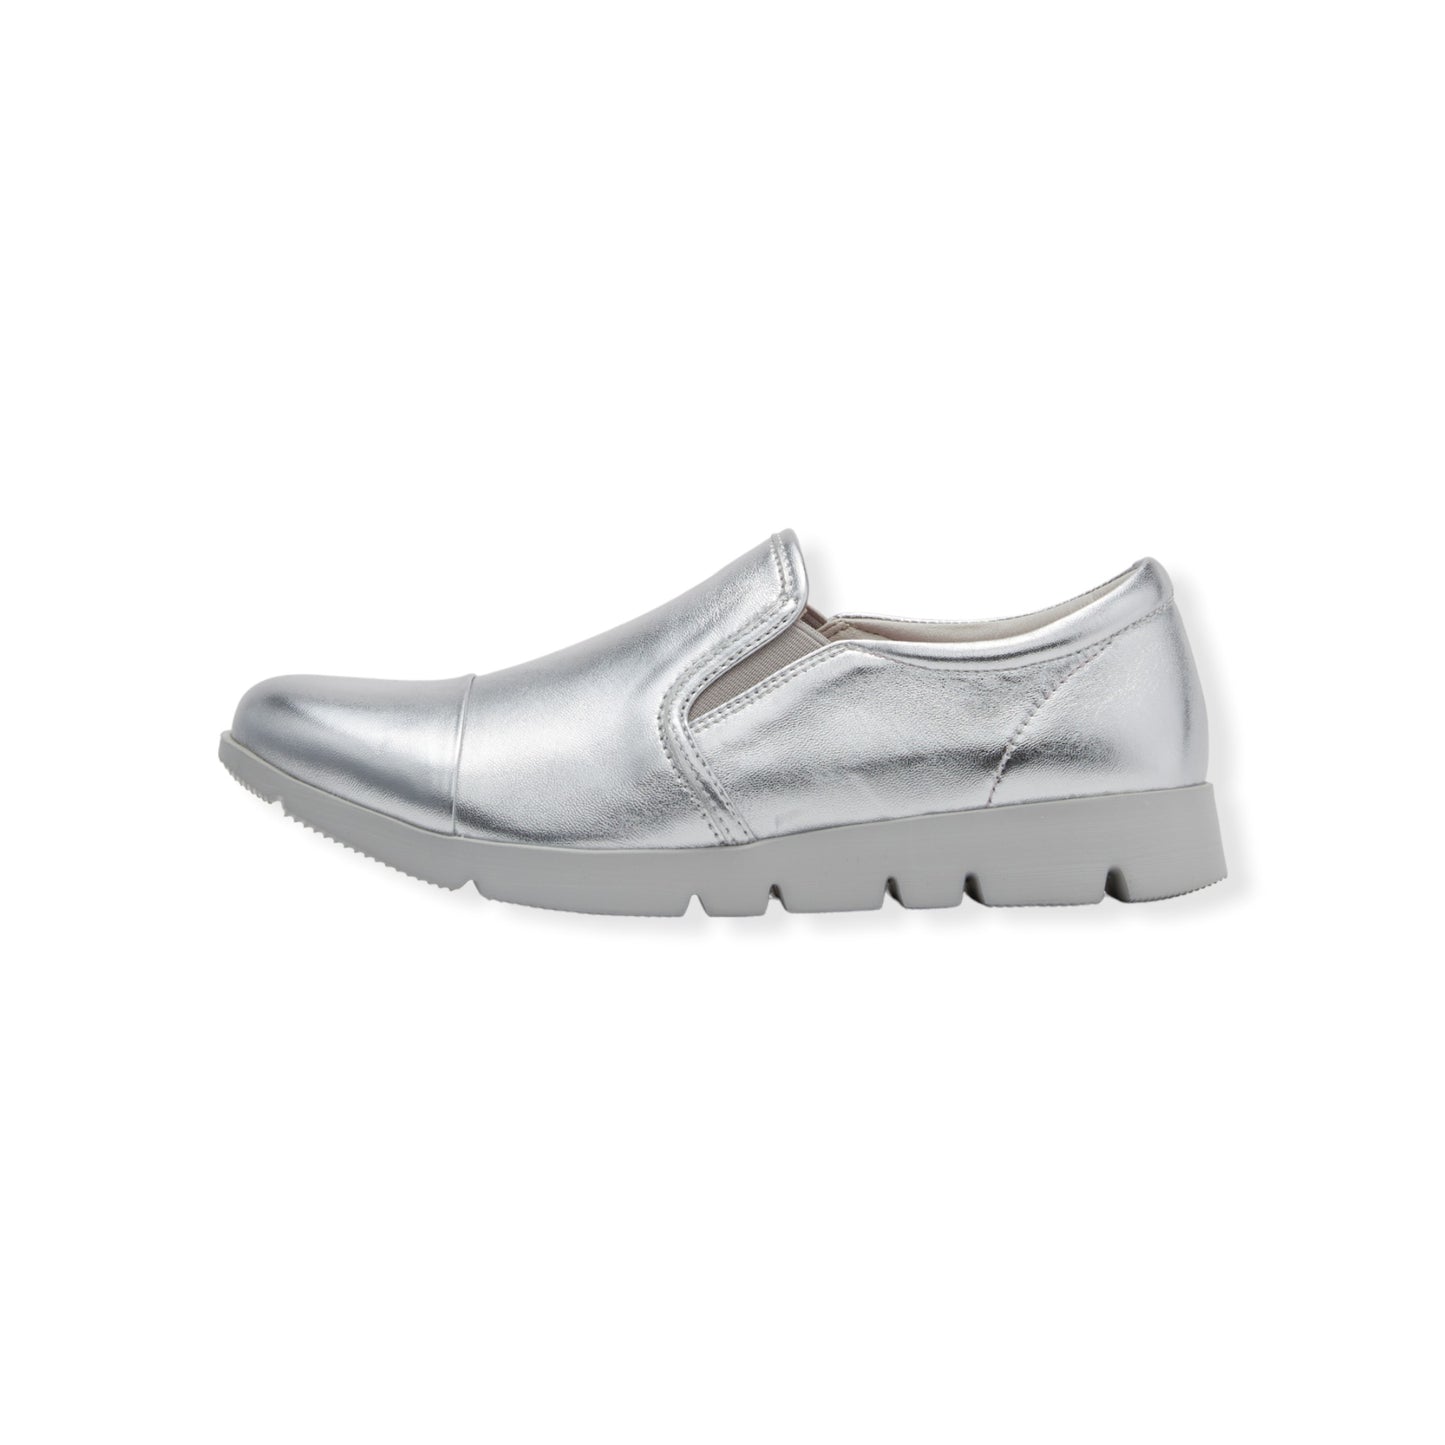 Sheepskin soft and ultra lightweight side-gore slip-on sneakers #FJ023